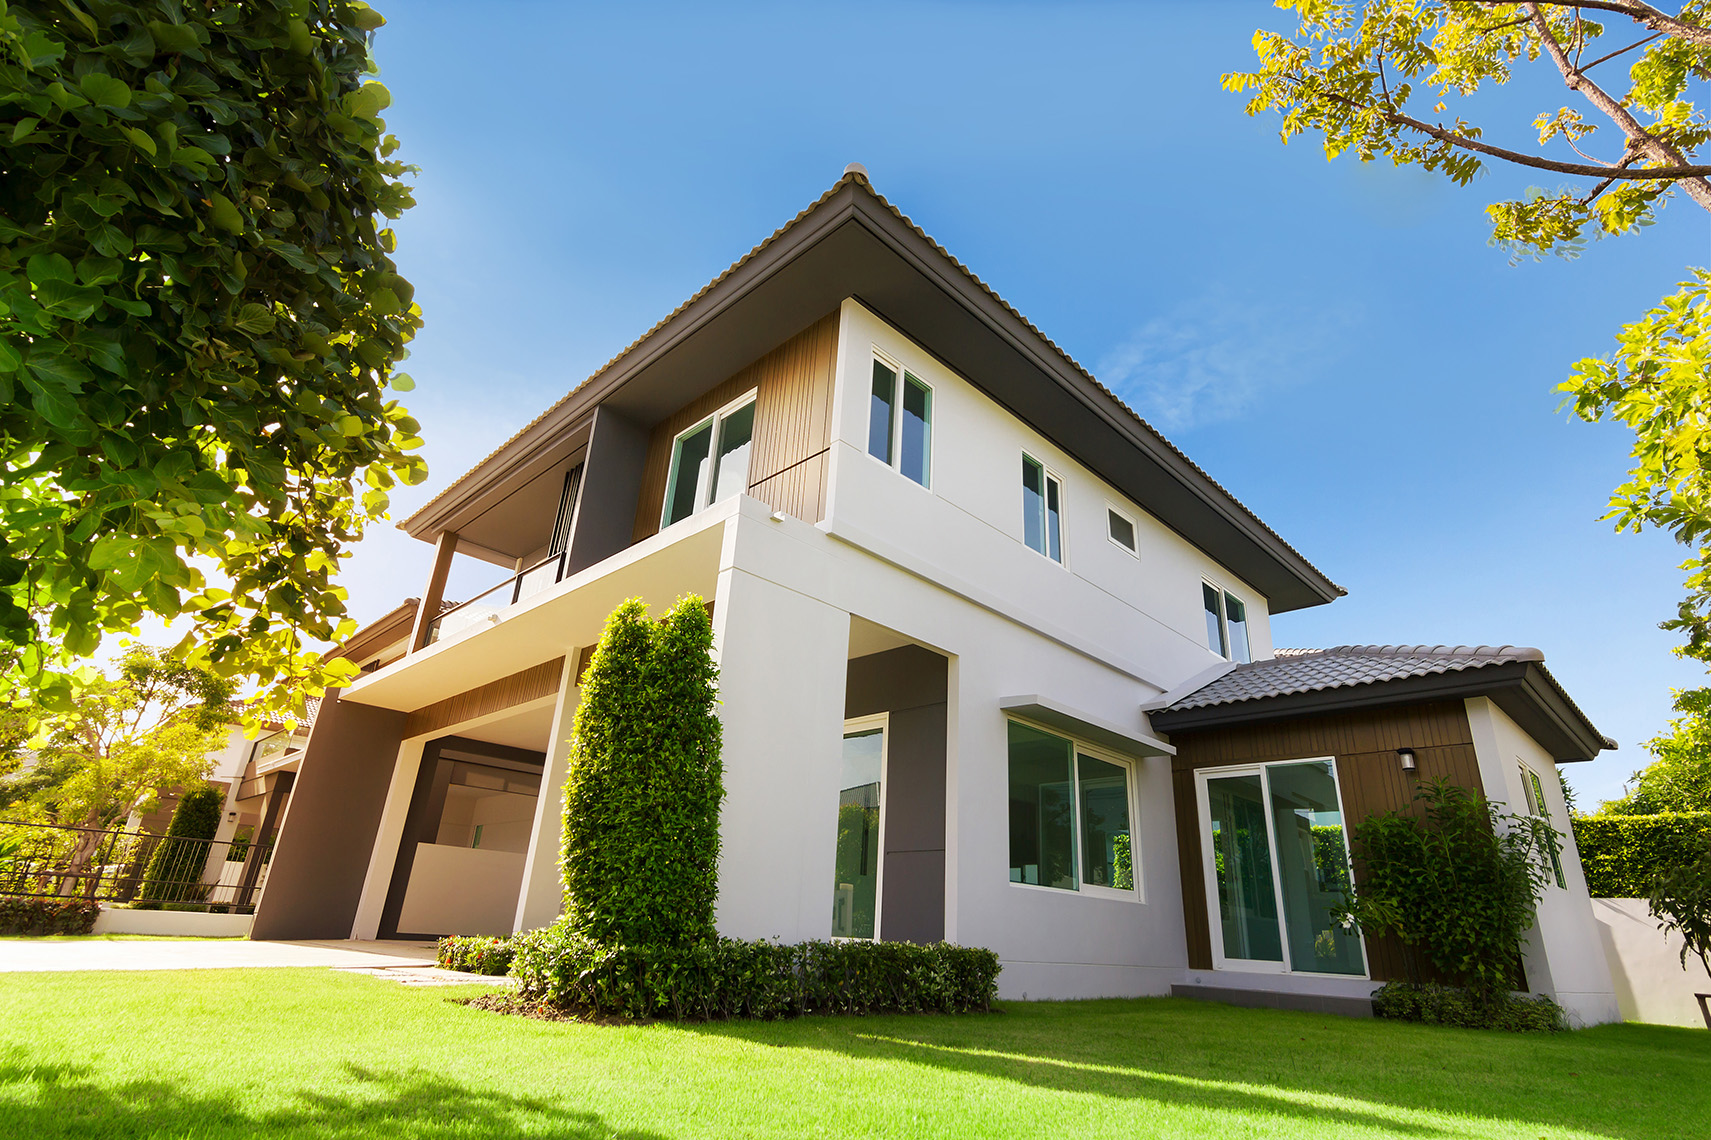 Conforming Loan Limit Increase for 2023 Trailblazer Mortgage, LLC